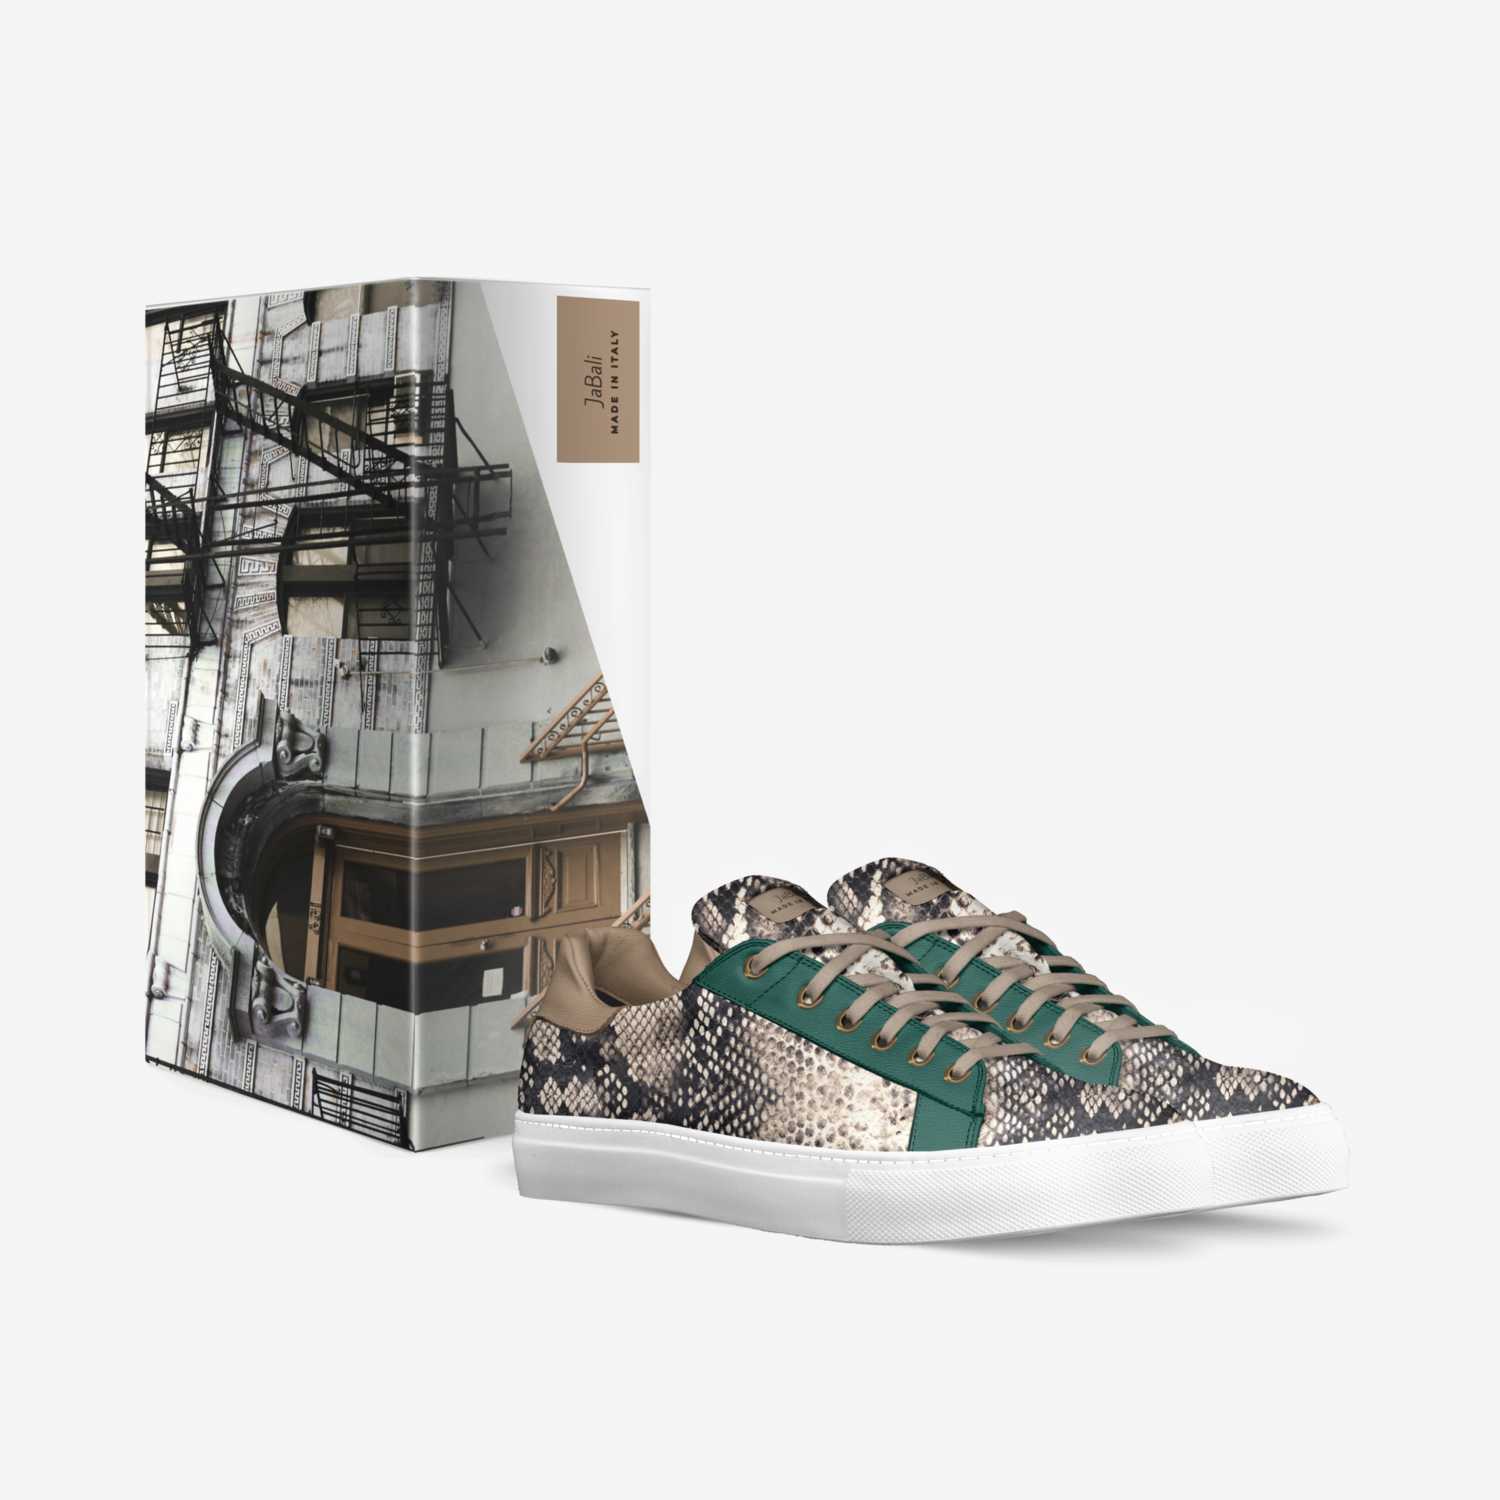 Mosiya custom made in Italy shoes by Jabali - The Luxury Brand | Box view